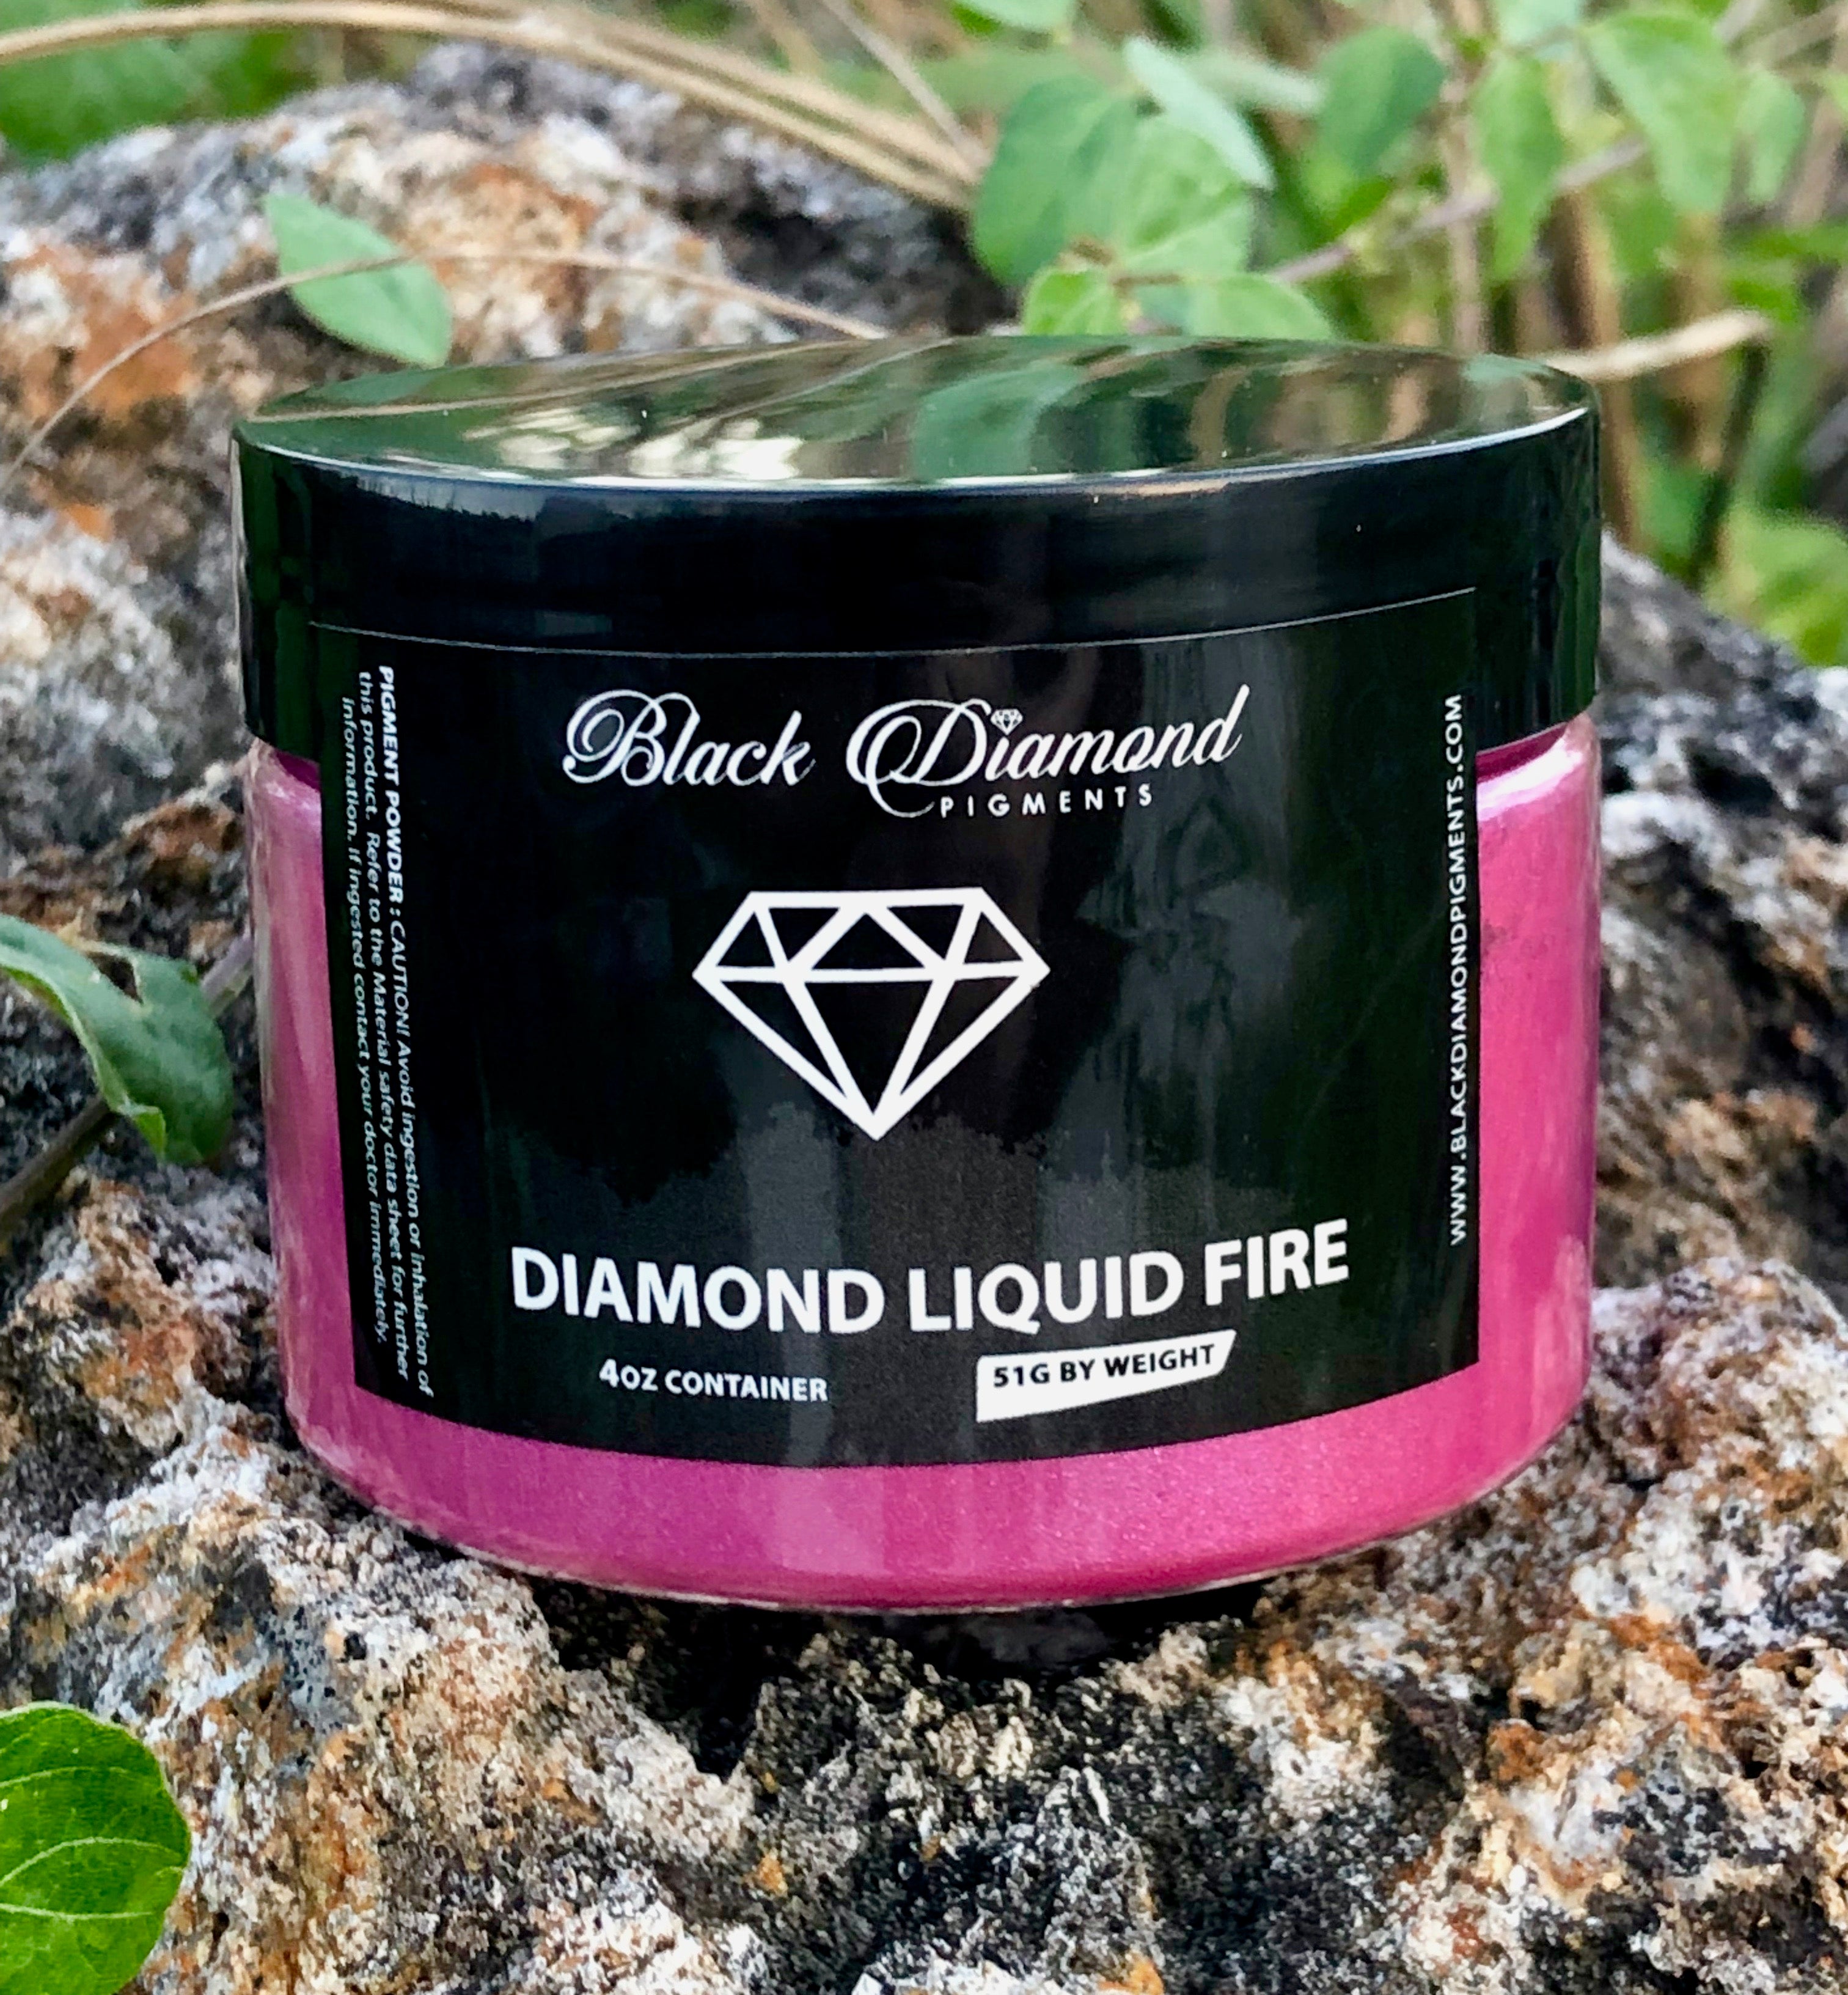 "DIAMOND LIQUIDFIRE" Black Diamond Pigments